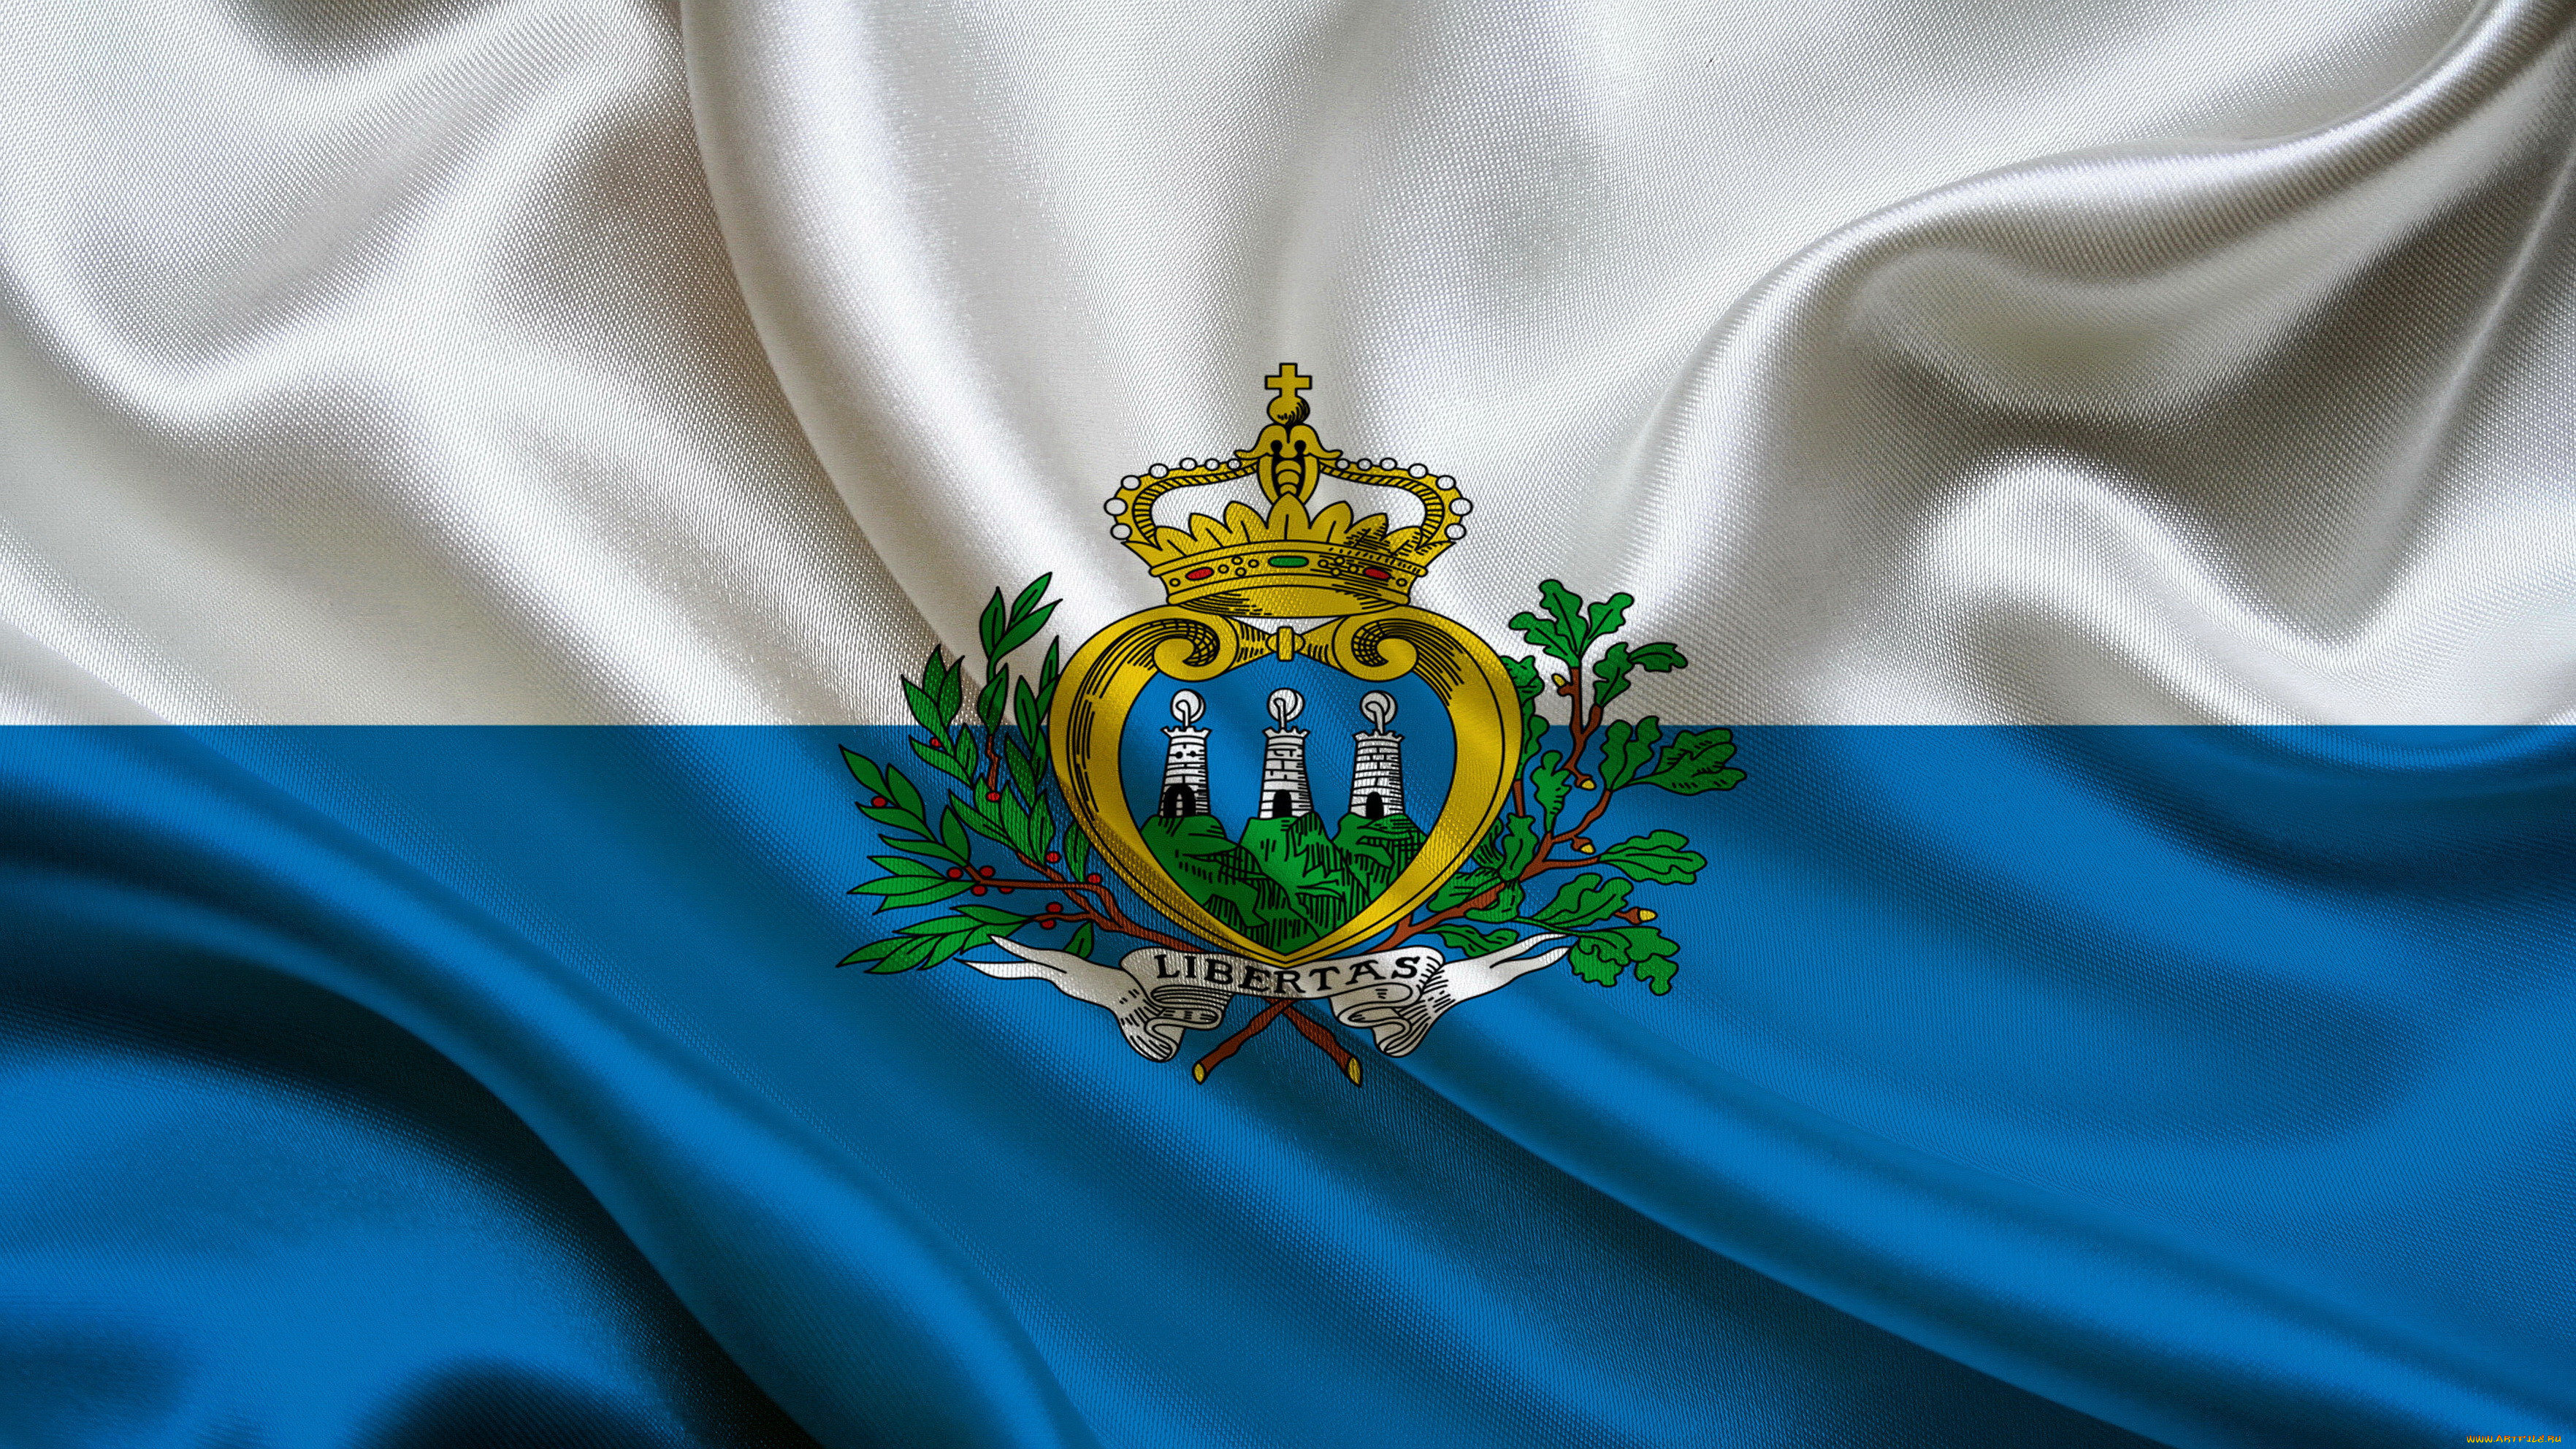 Флаг сан марино. Флаг страны Сан Марино. Республика Сан Марино флаг. Столица Сан-Марино флаг.